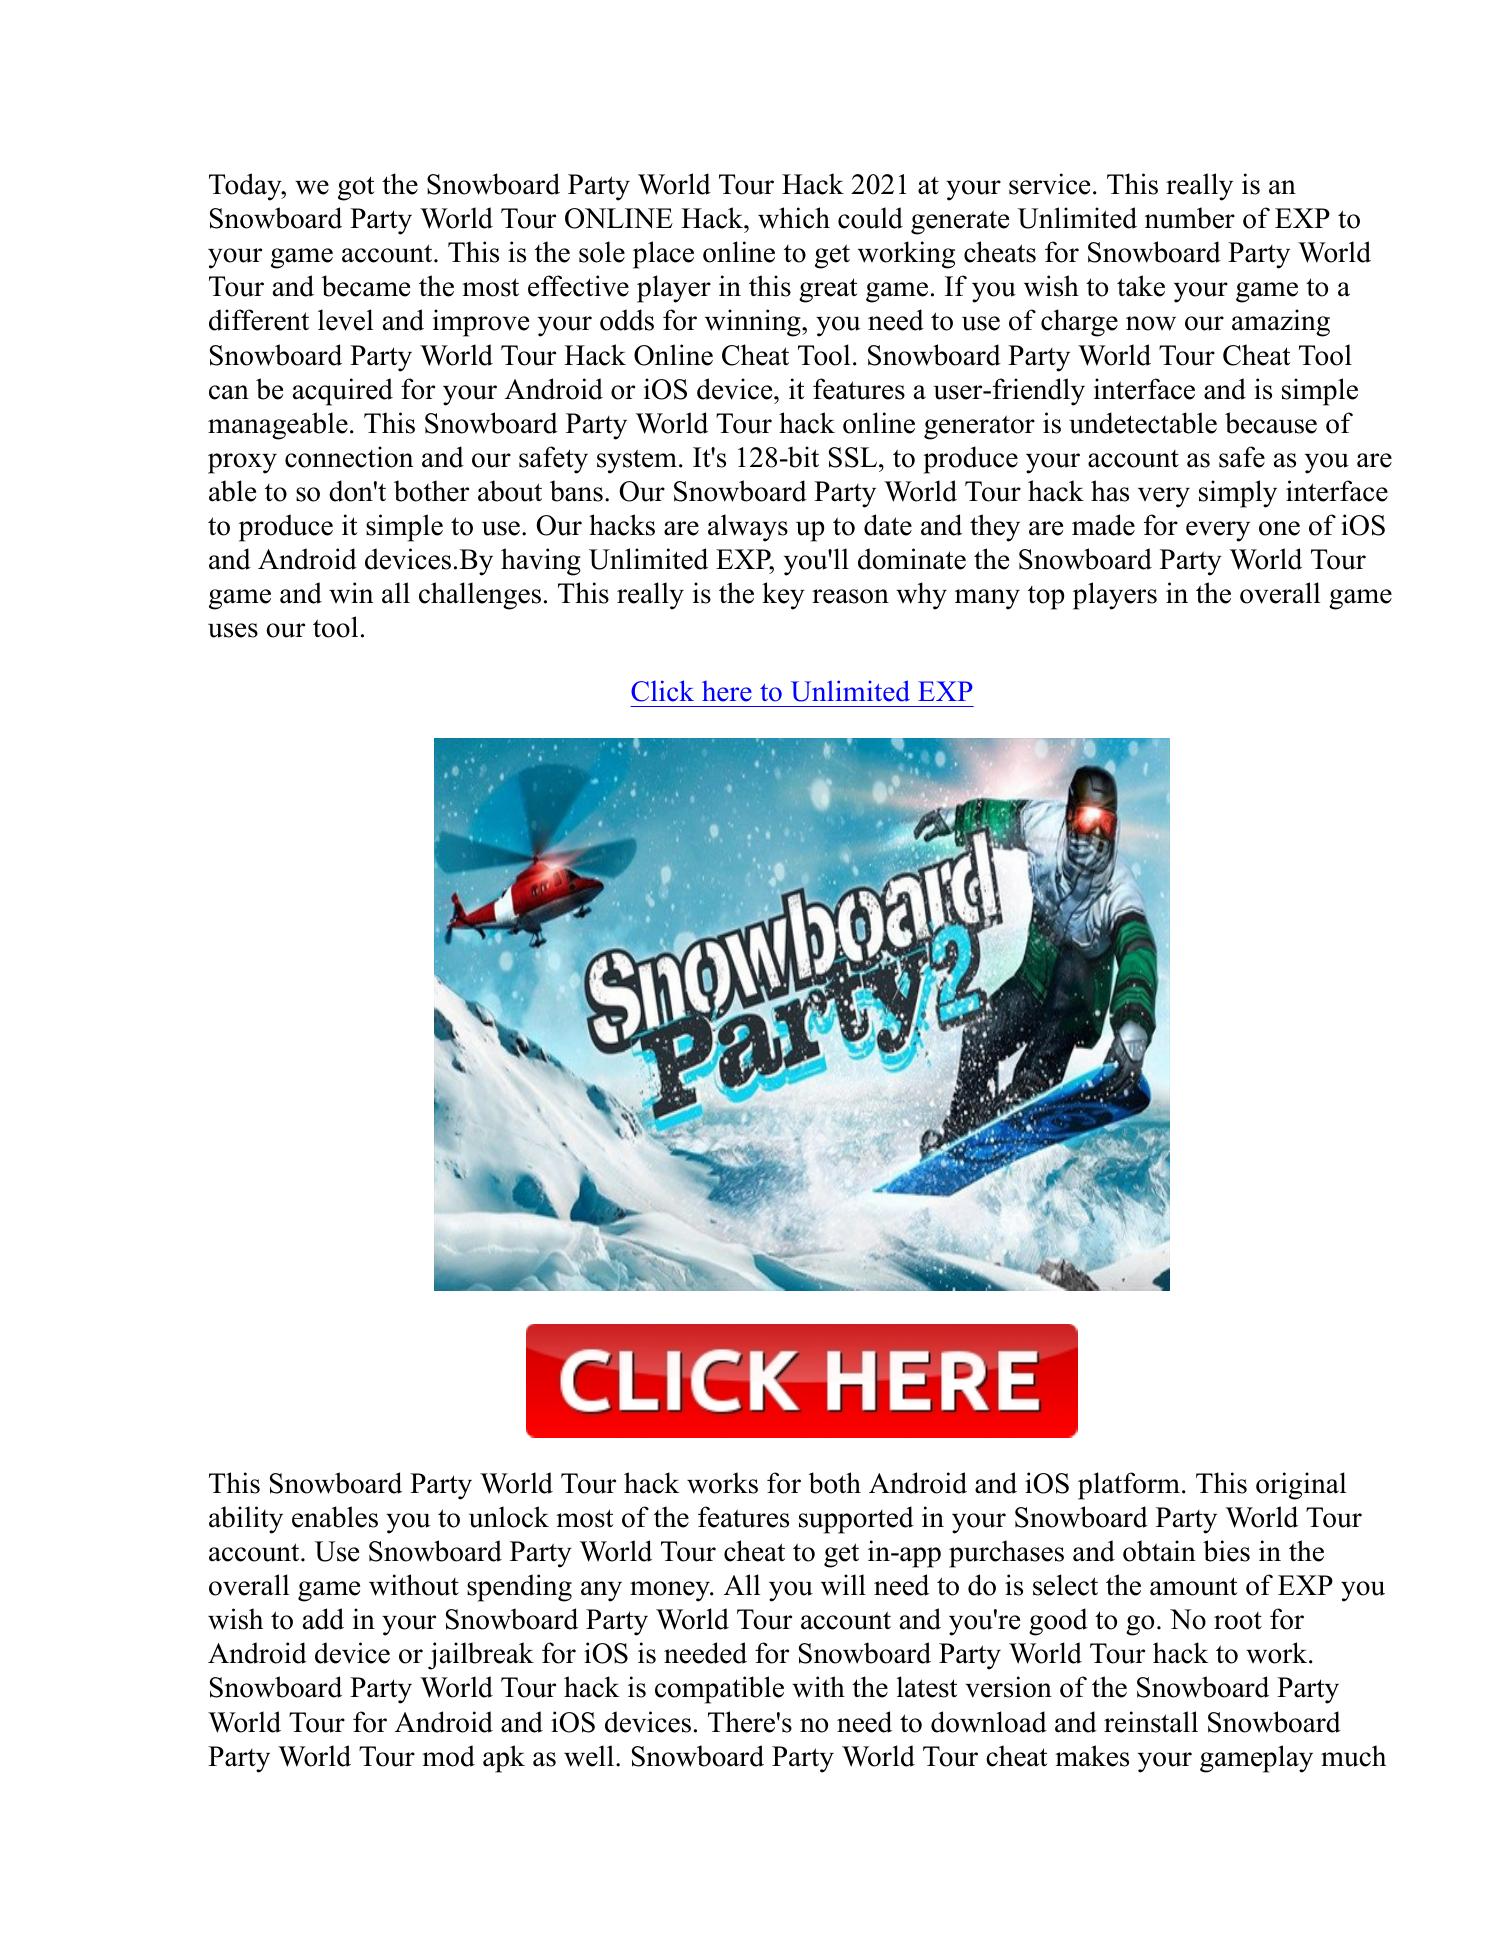 snowboard party world tour cheats